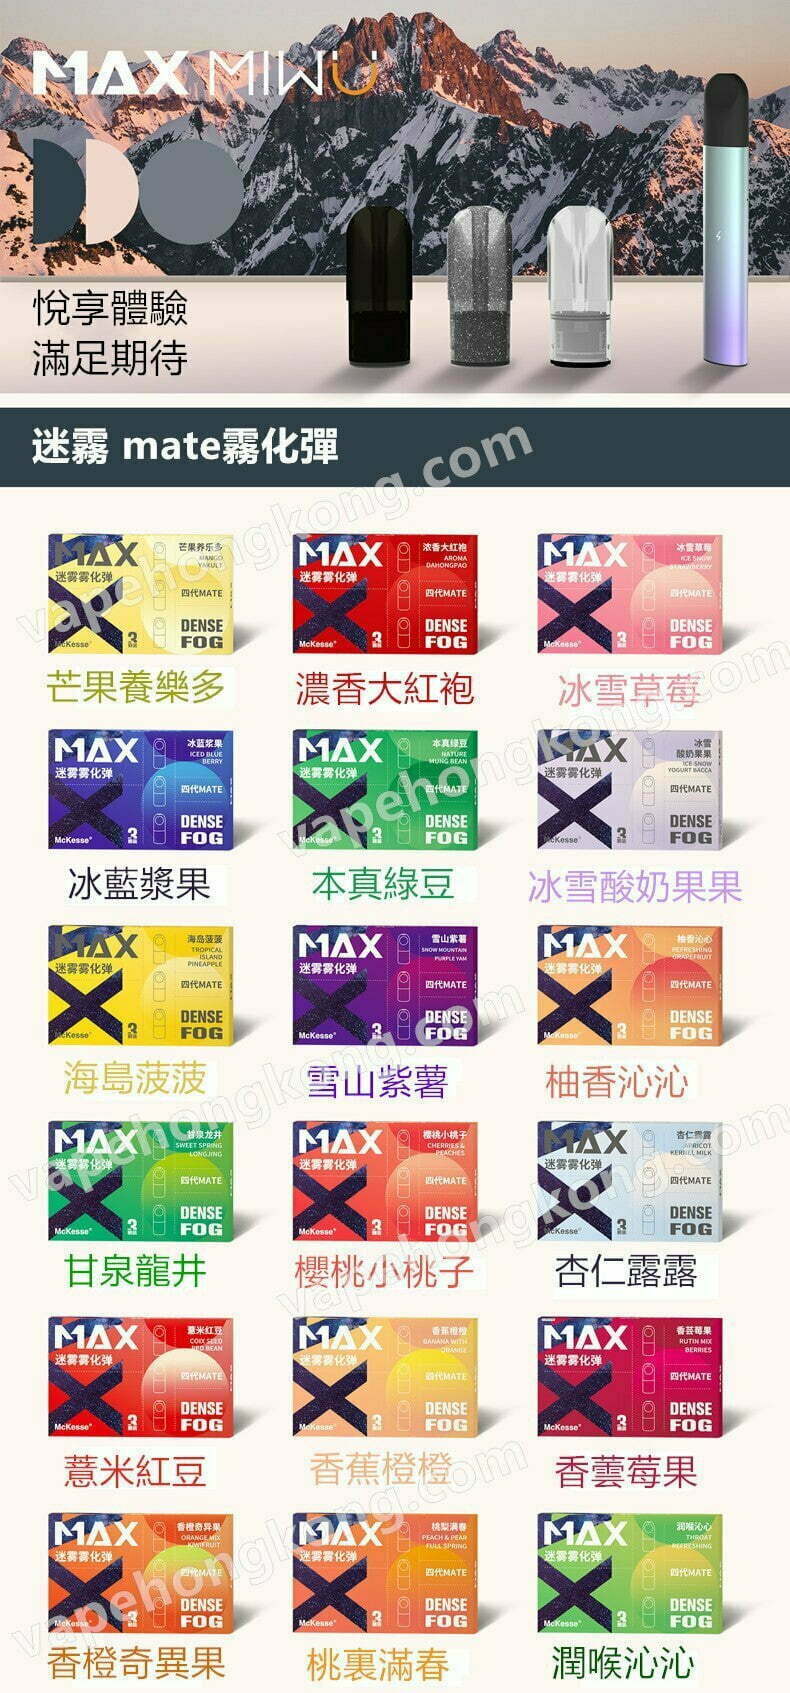 MAX 迷霧 MATE 系列煙彈 (Relx 4, 5代通用)(多口味)(煙彈x3)